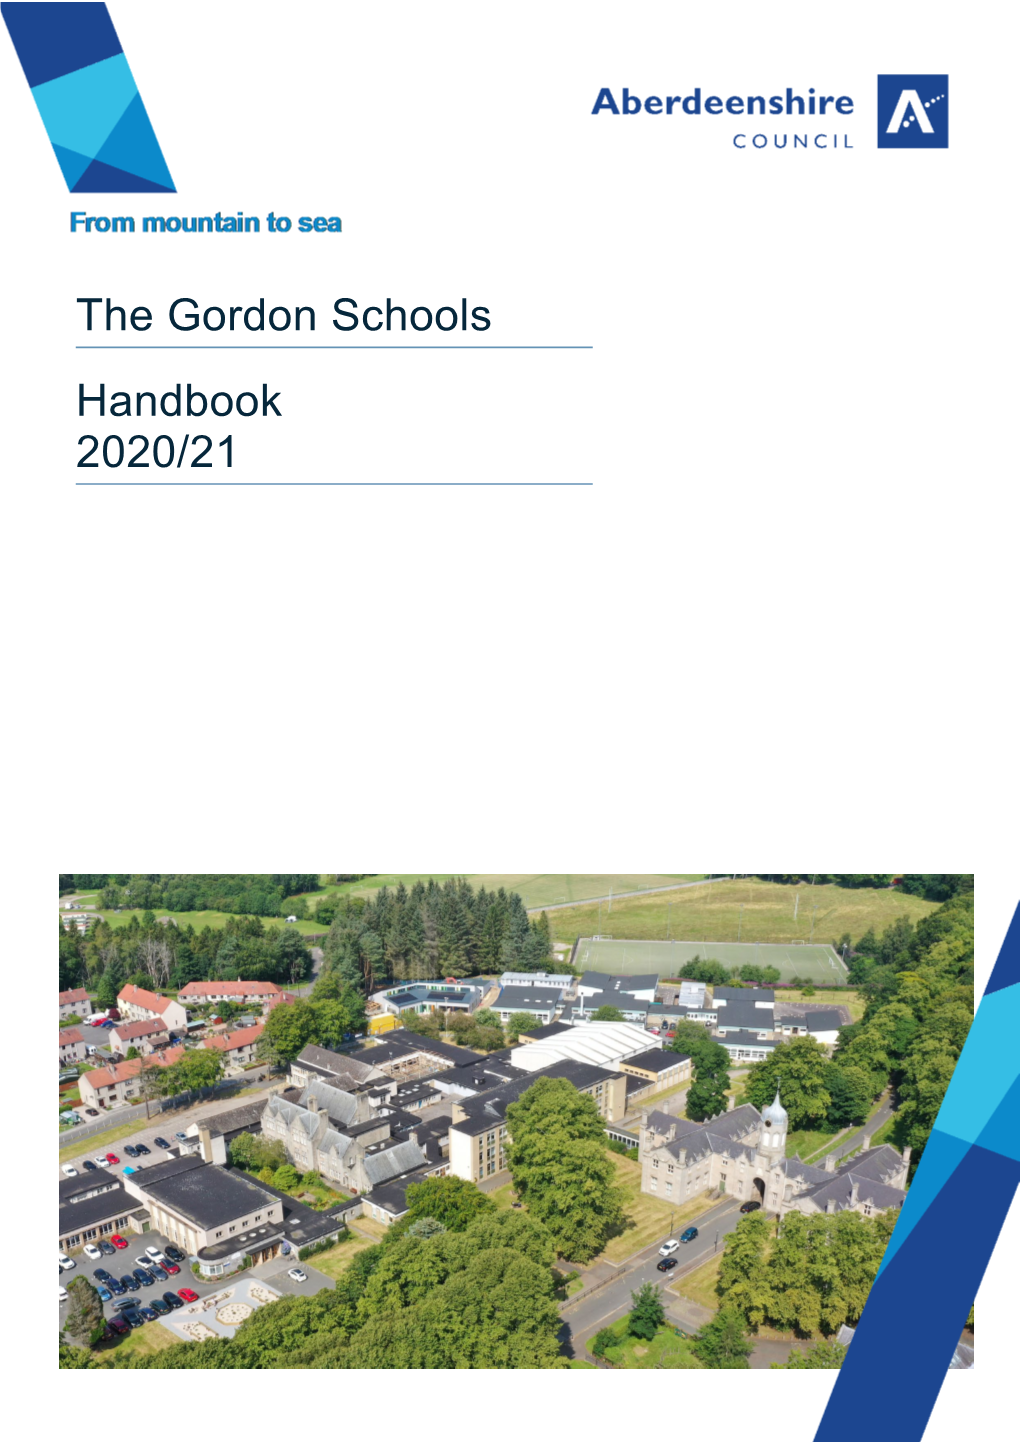 The Gordon Schools Handbook 2020/21